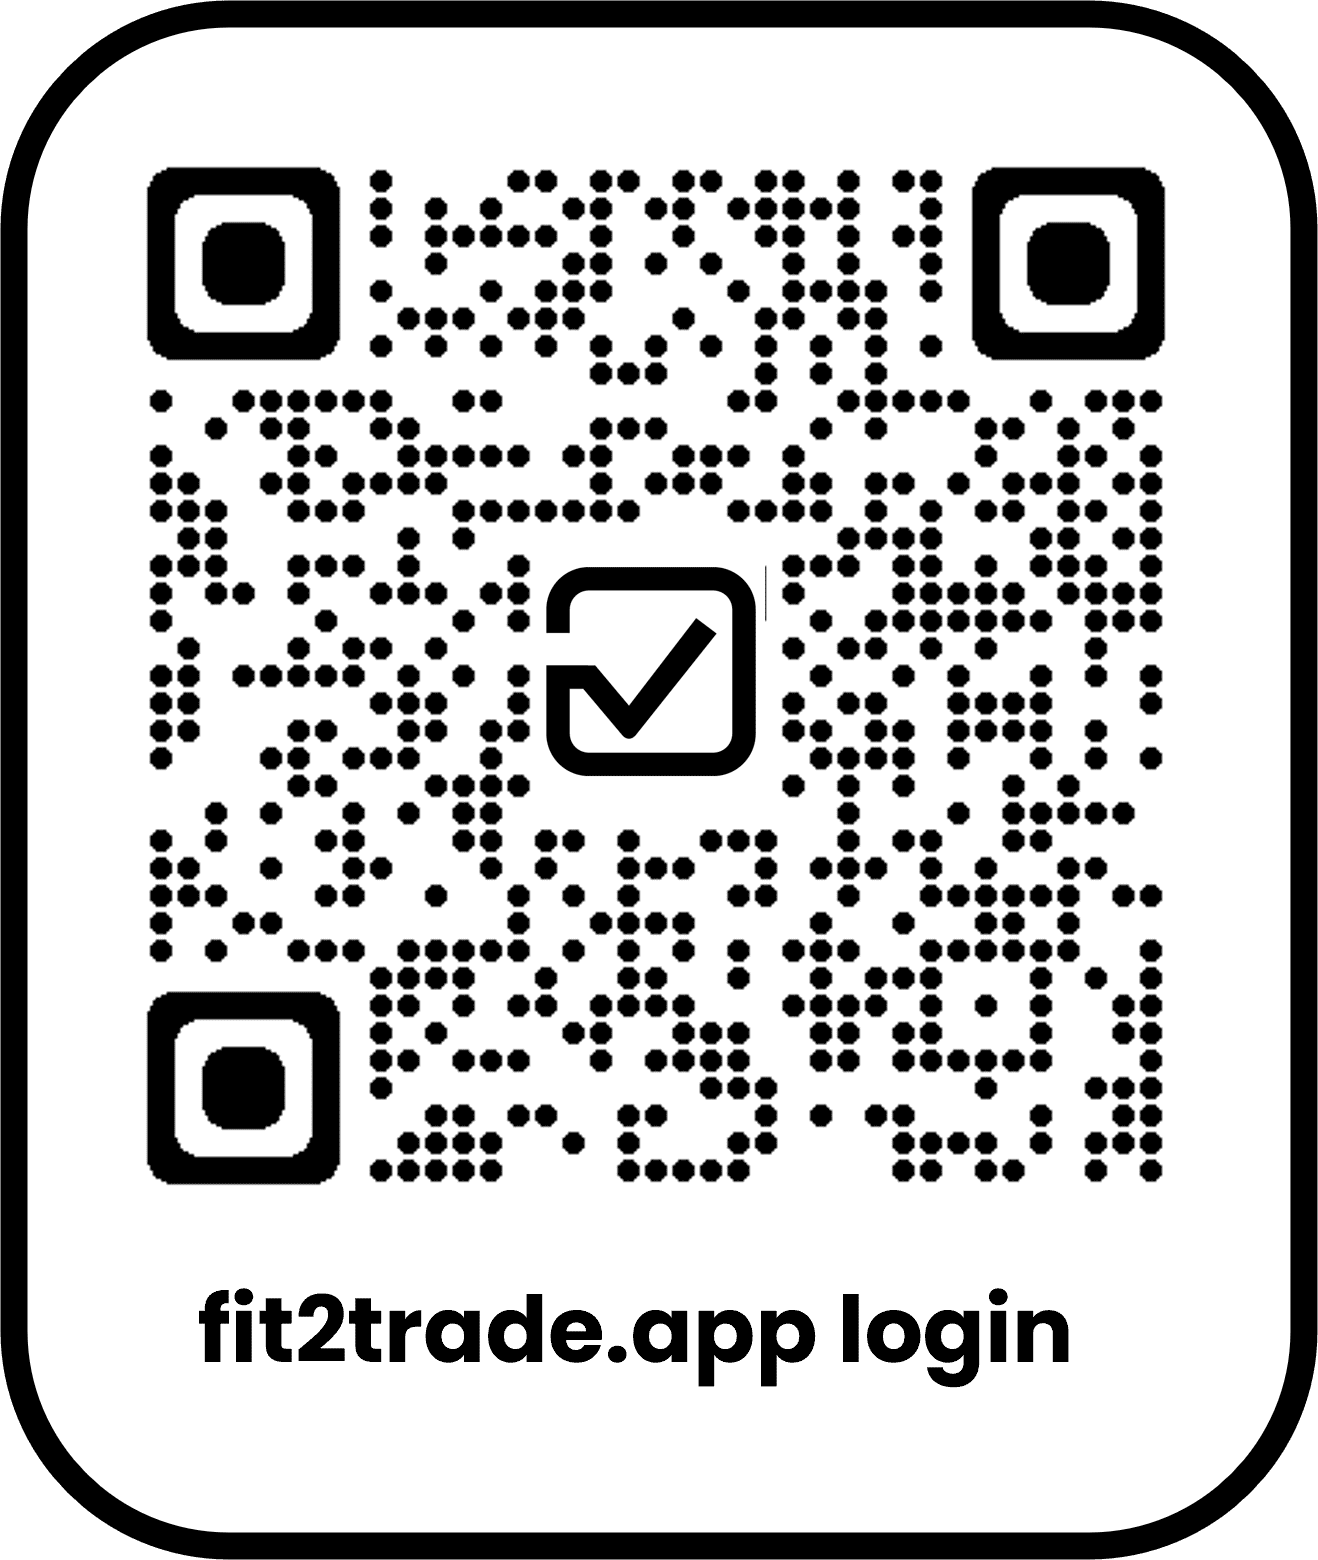 Fit2trade.app login via QR code